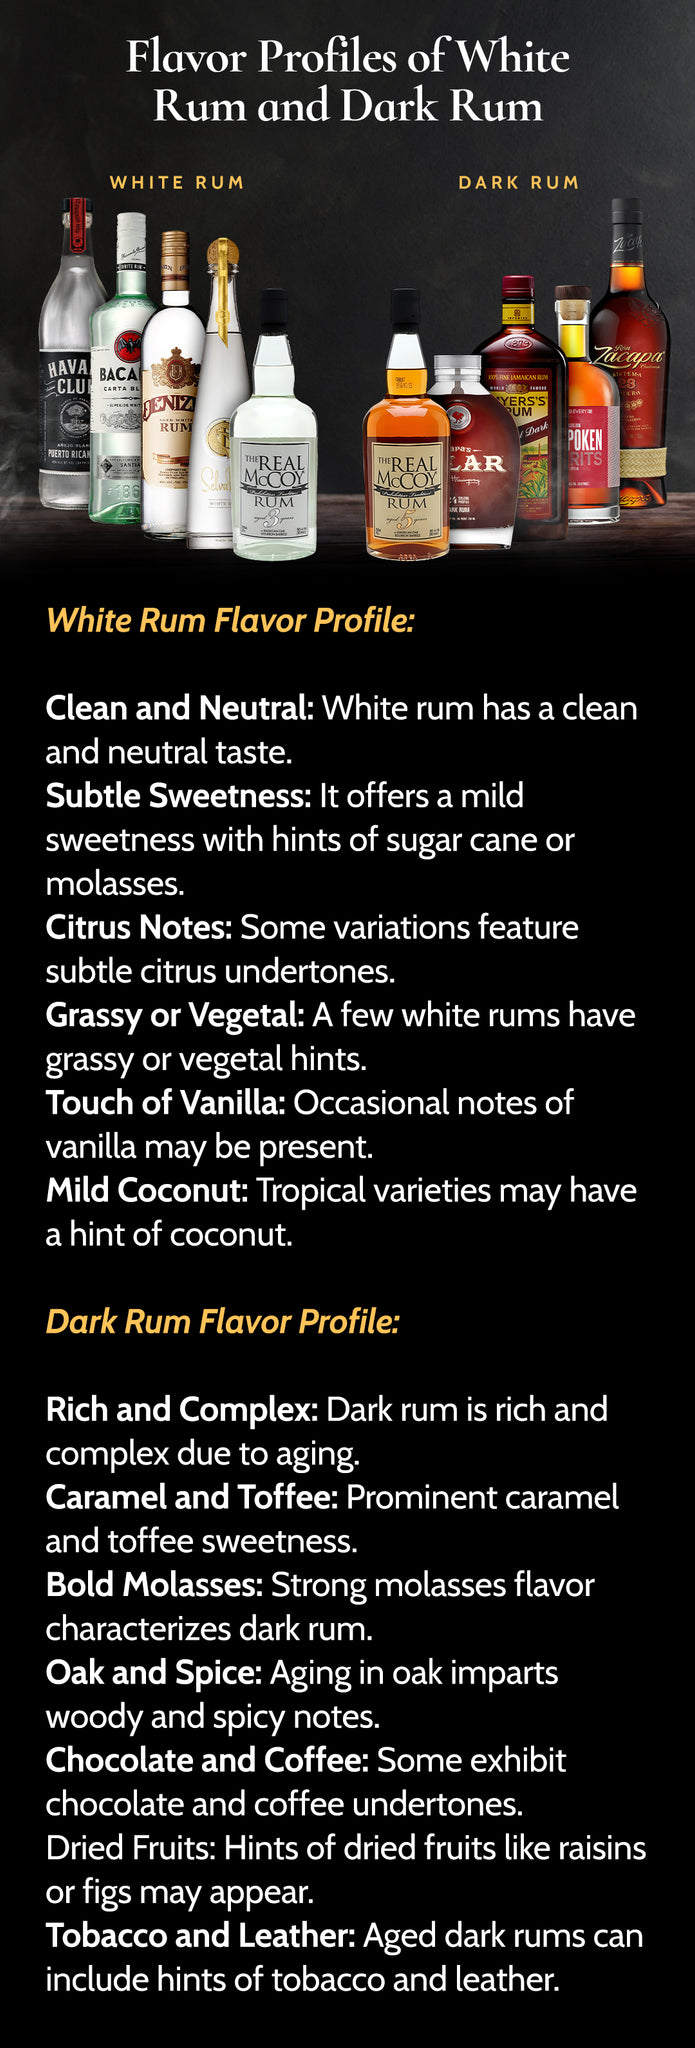 Flavor profiles